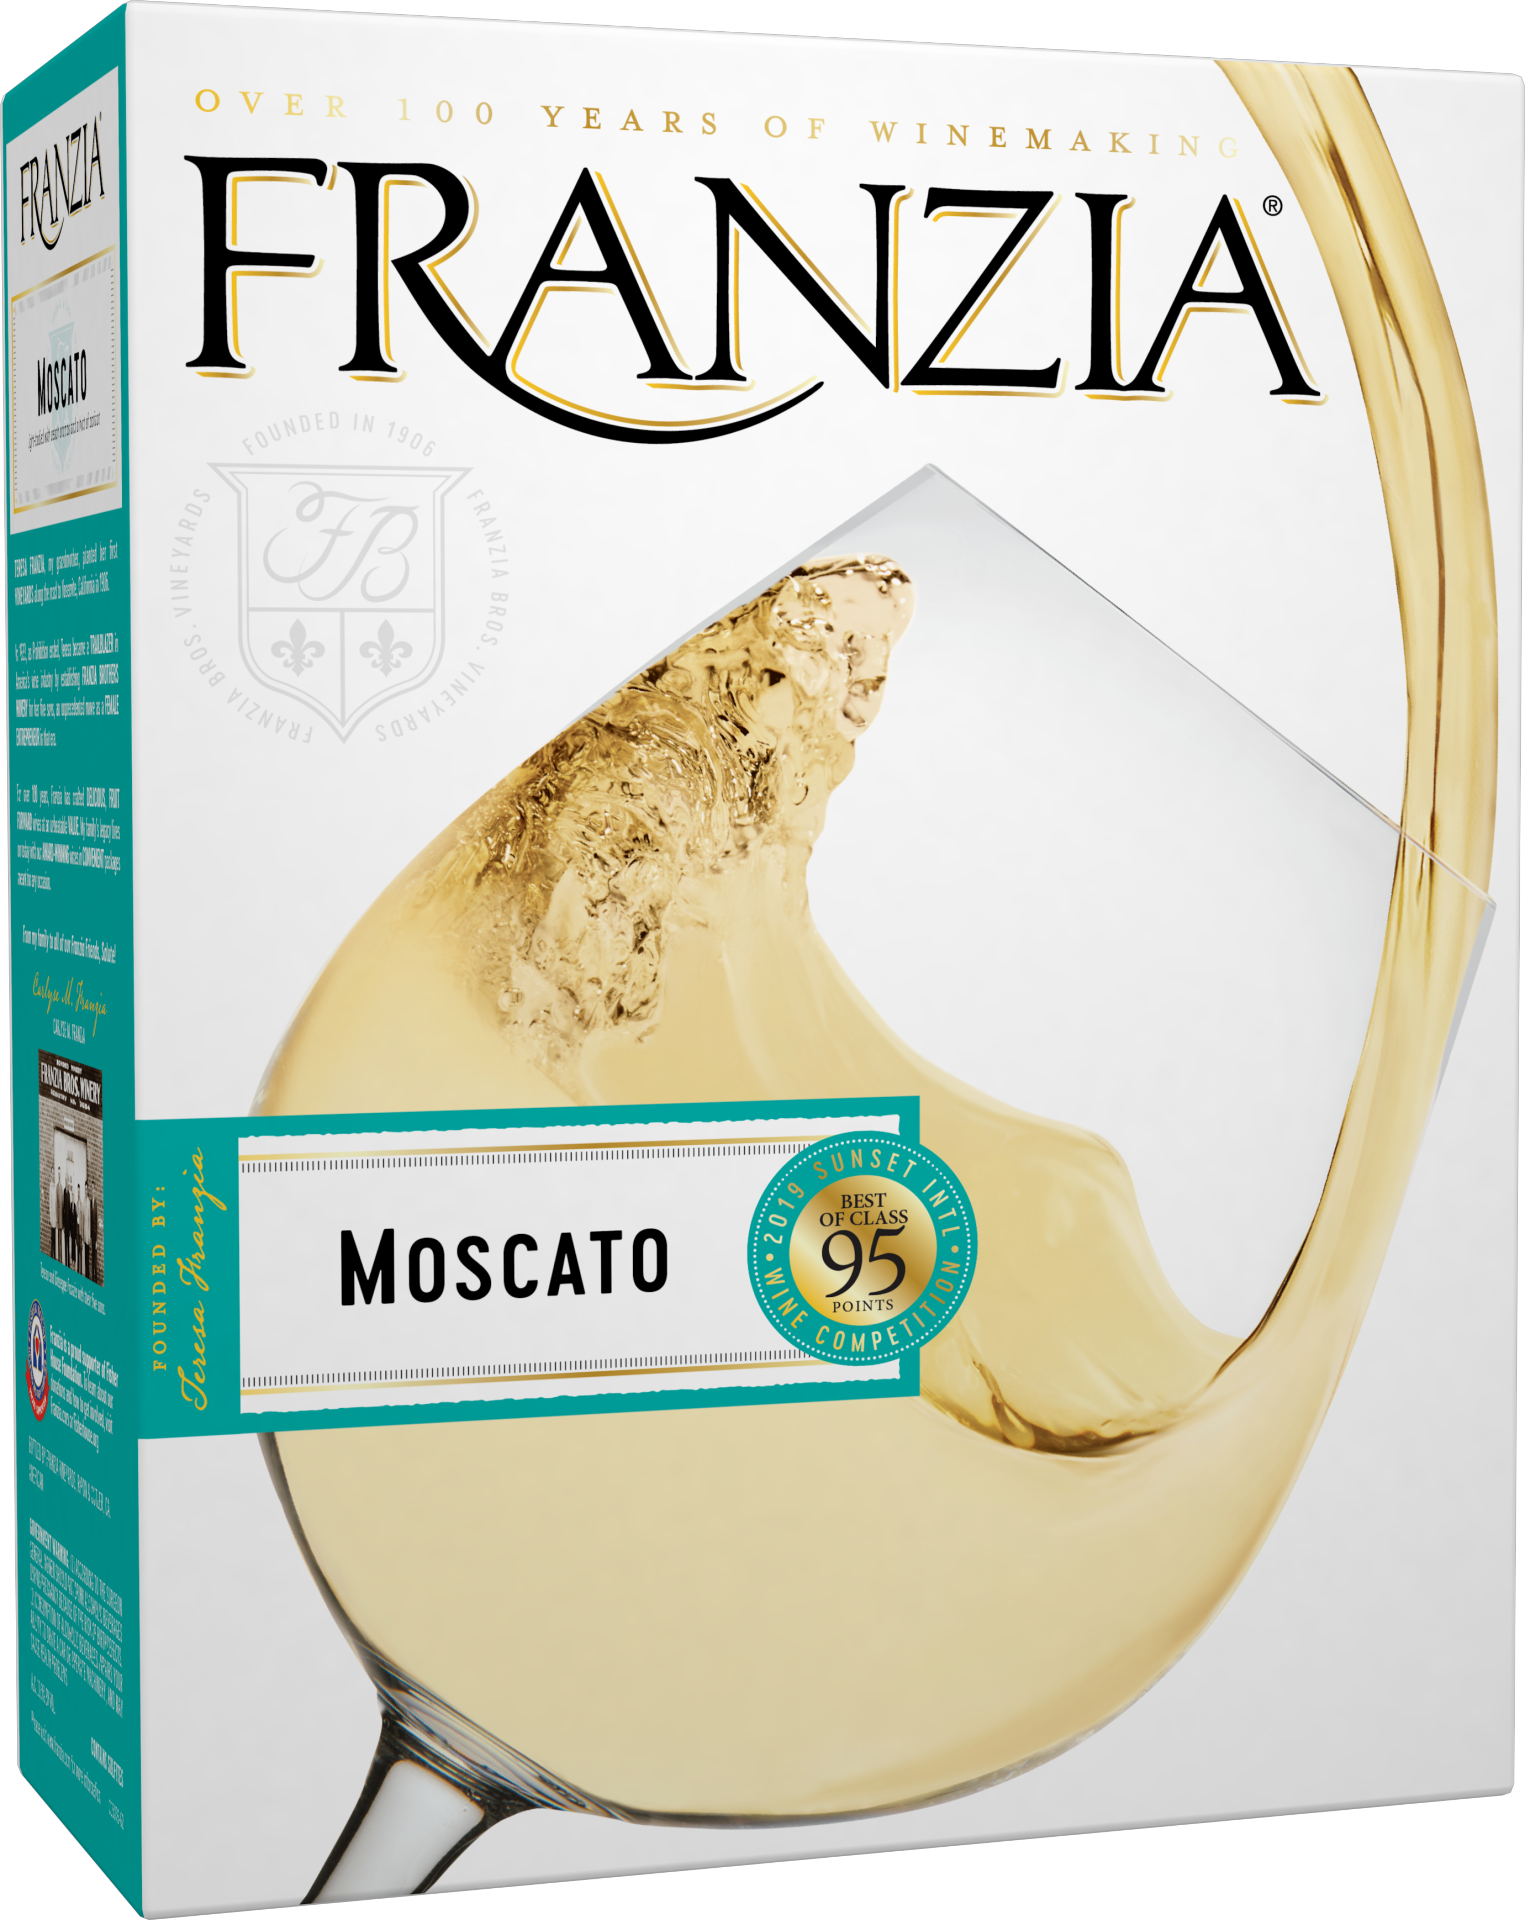 slide 1 of 4, Franzia Moscato, 3 liter